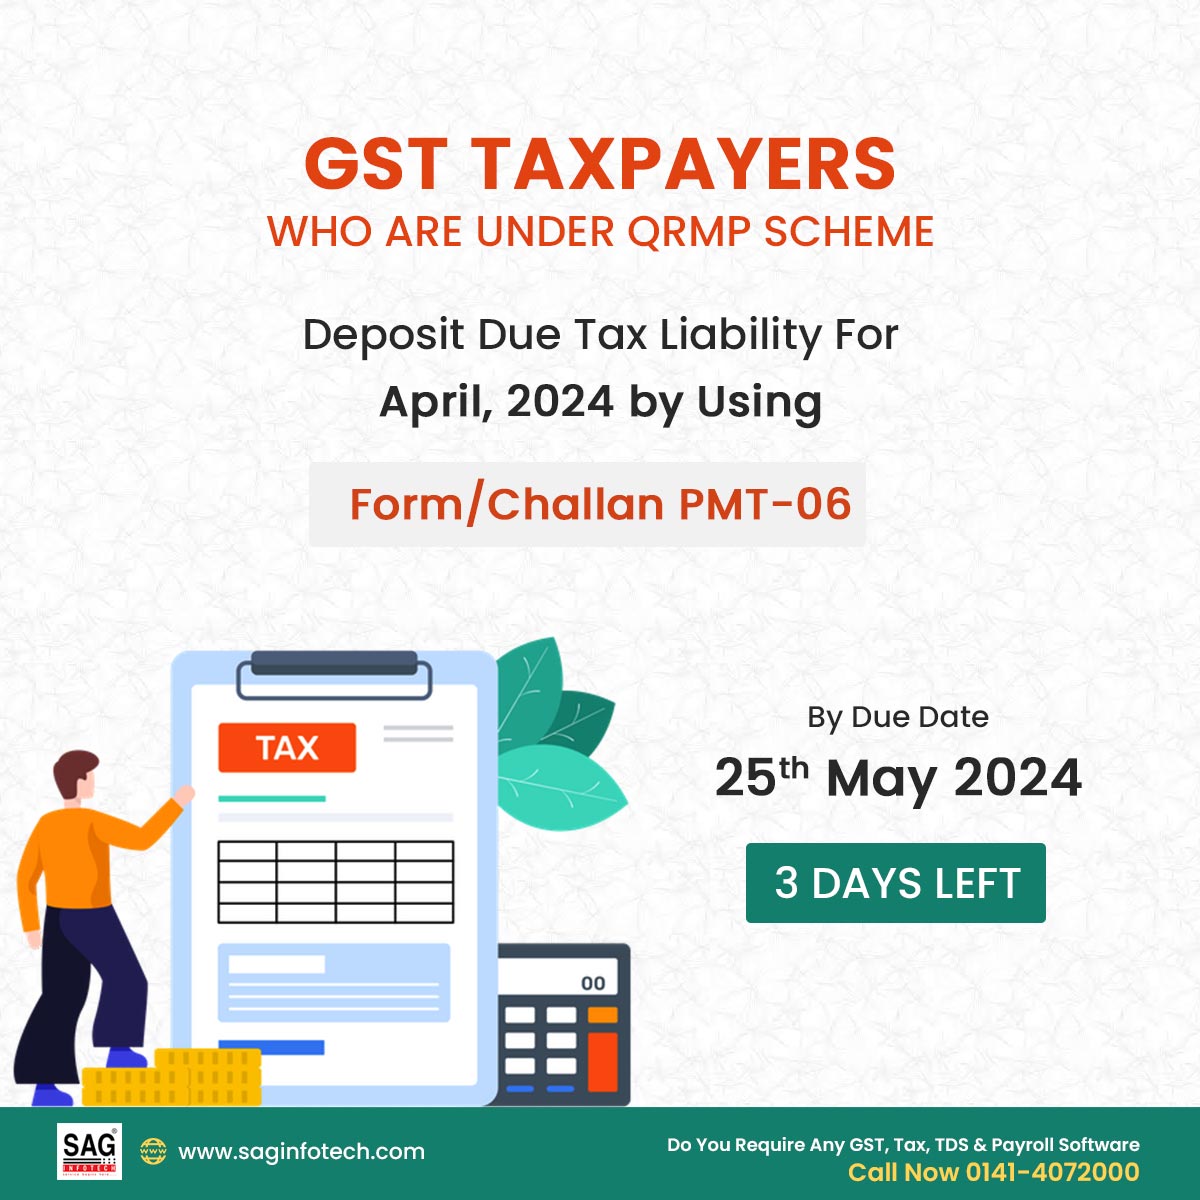 Attention, GST taxpayers who are under the QRMP Scheme!
Get more:bit.ly/3OQGmoL
#GST #QRMPScheme #GSTtaxpayers #pmt06